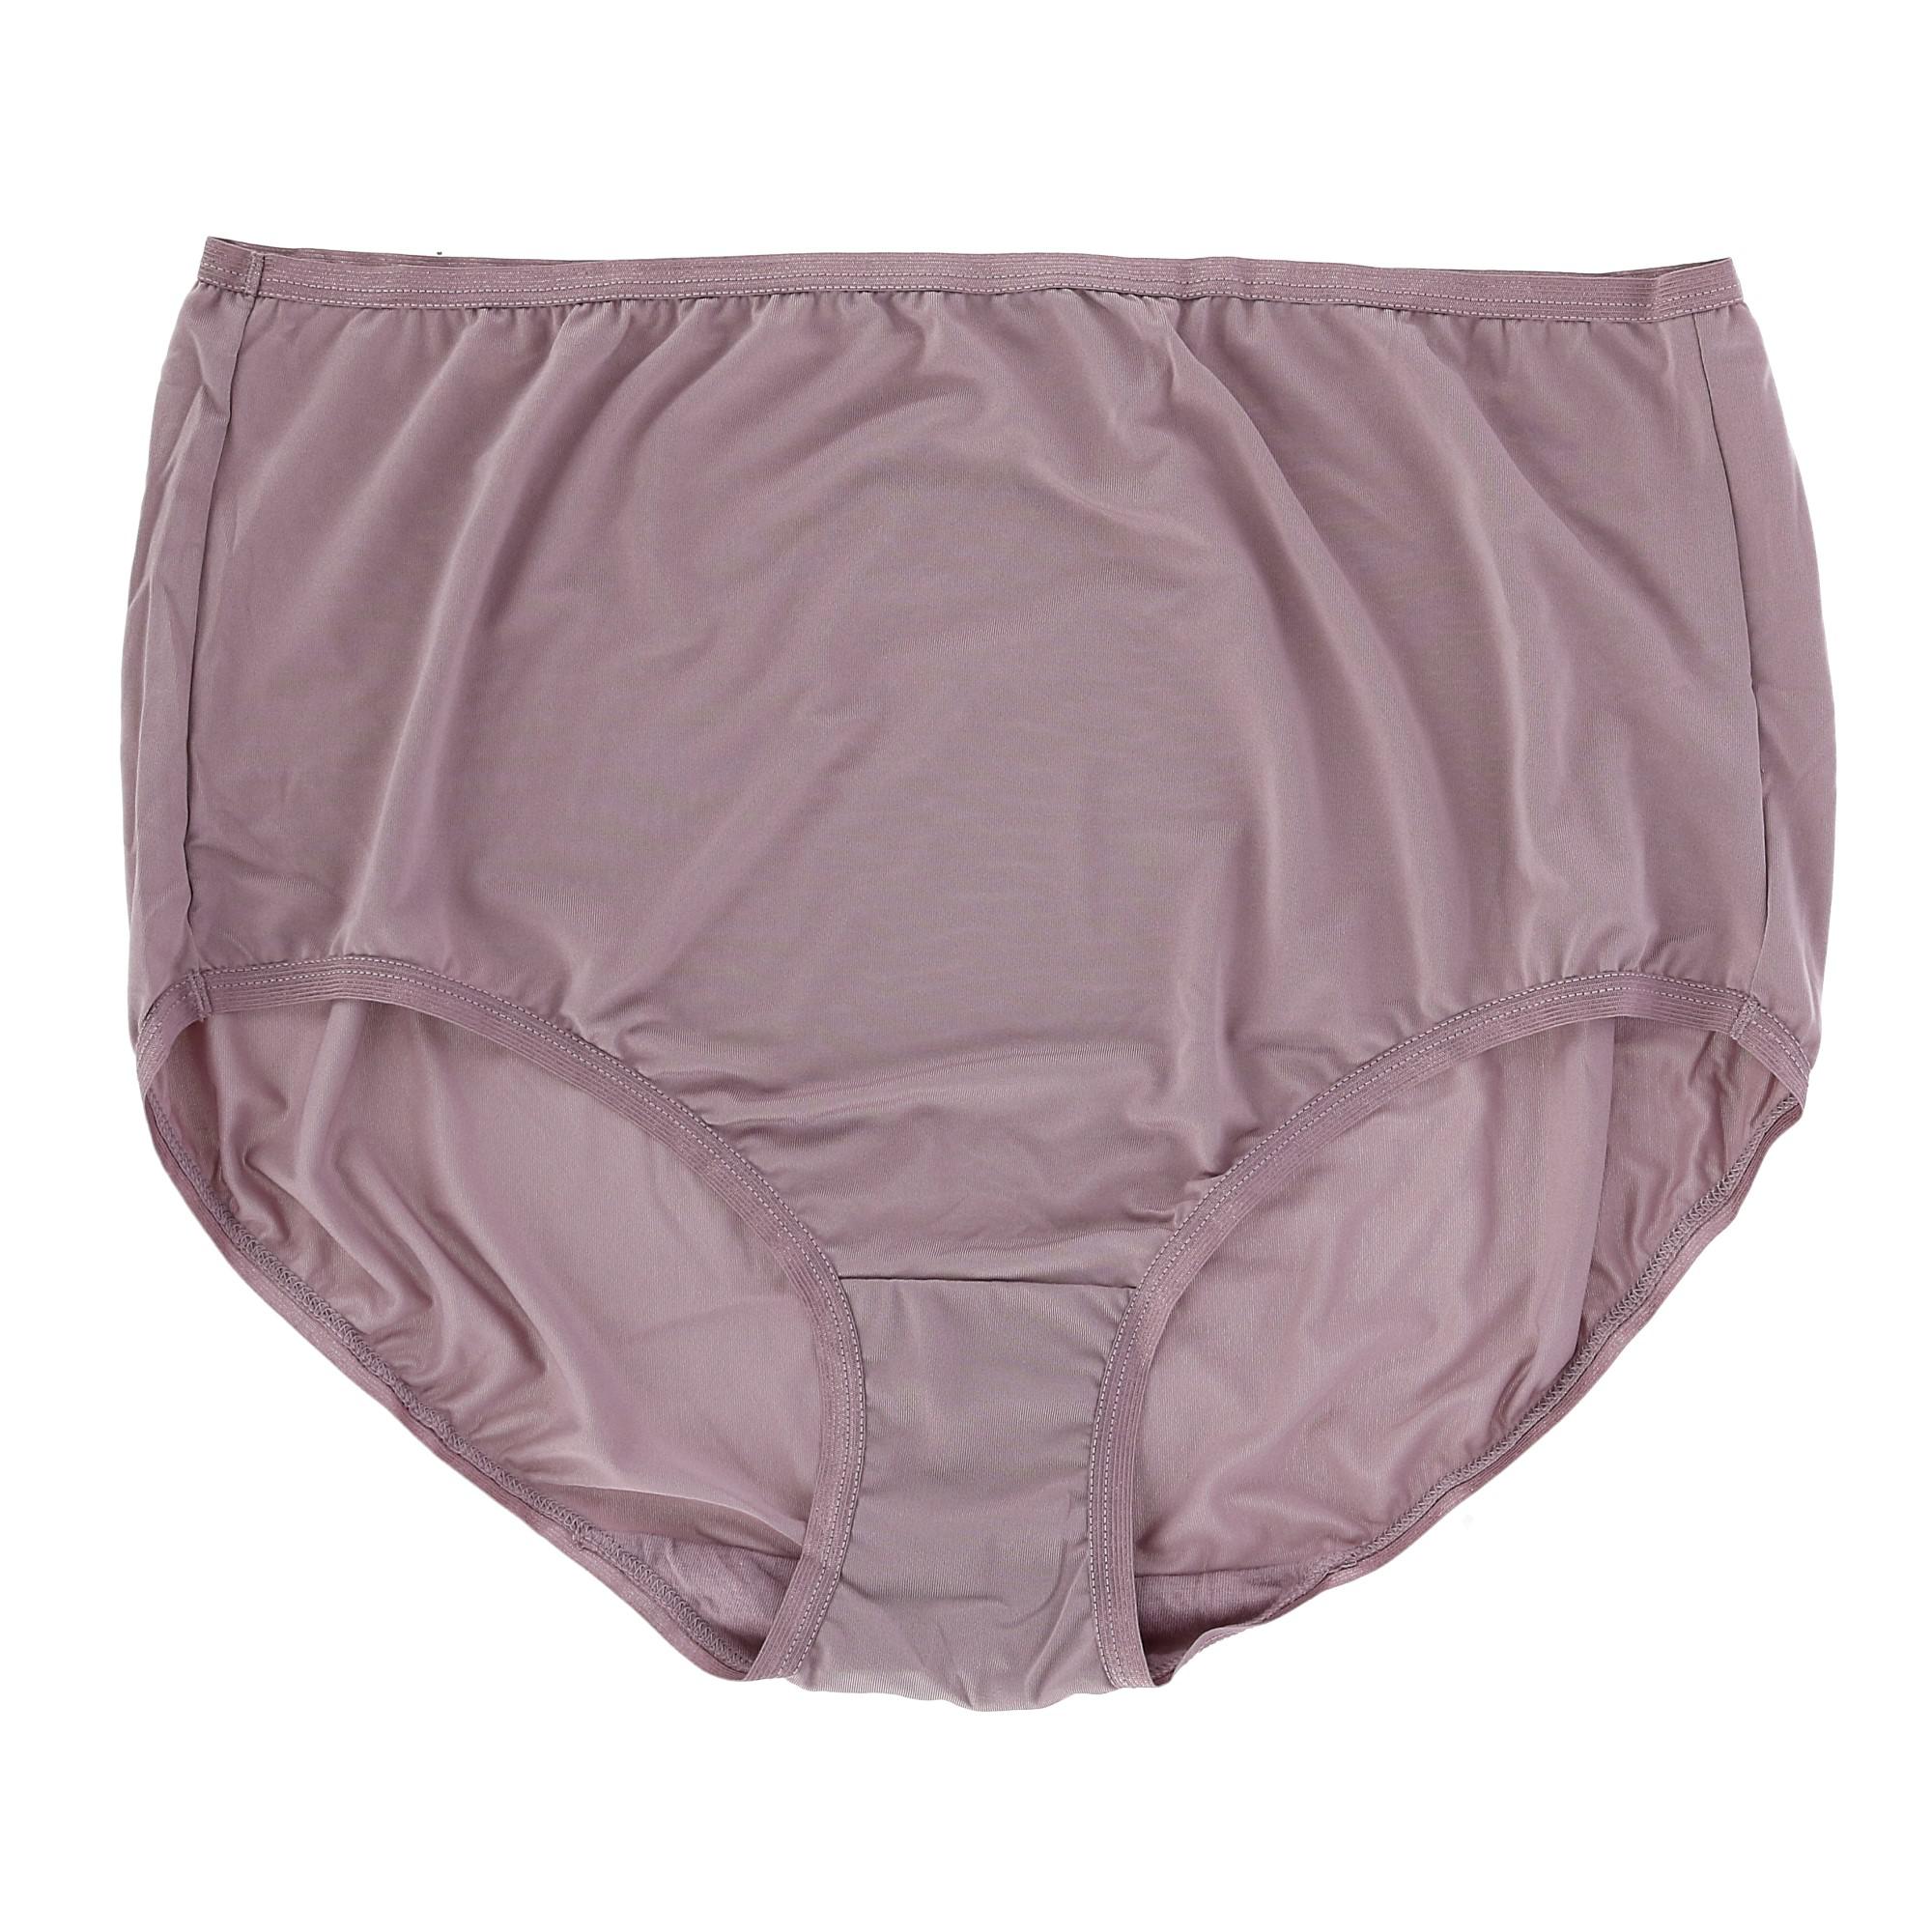 Buy Bras, Panties & Lingerie in Women's Clothing from Kmart